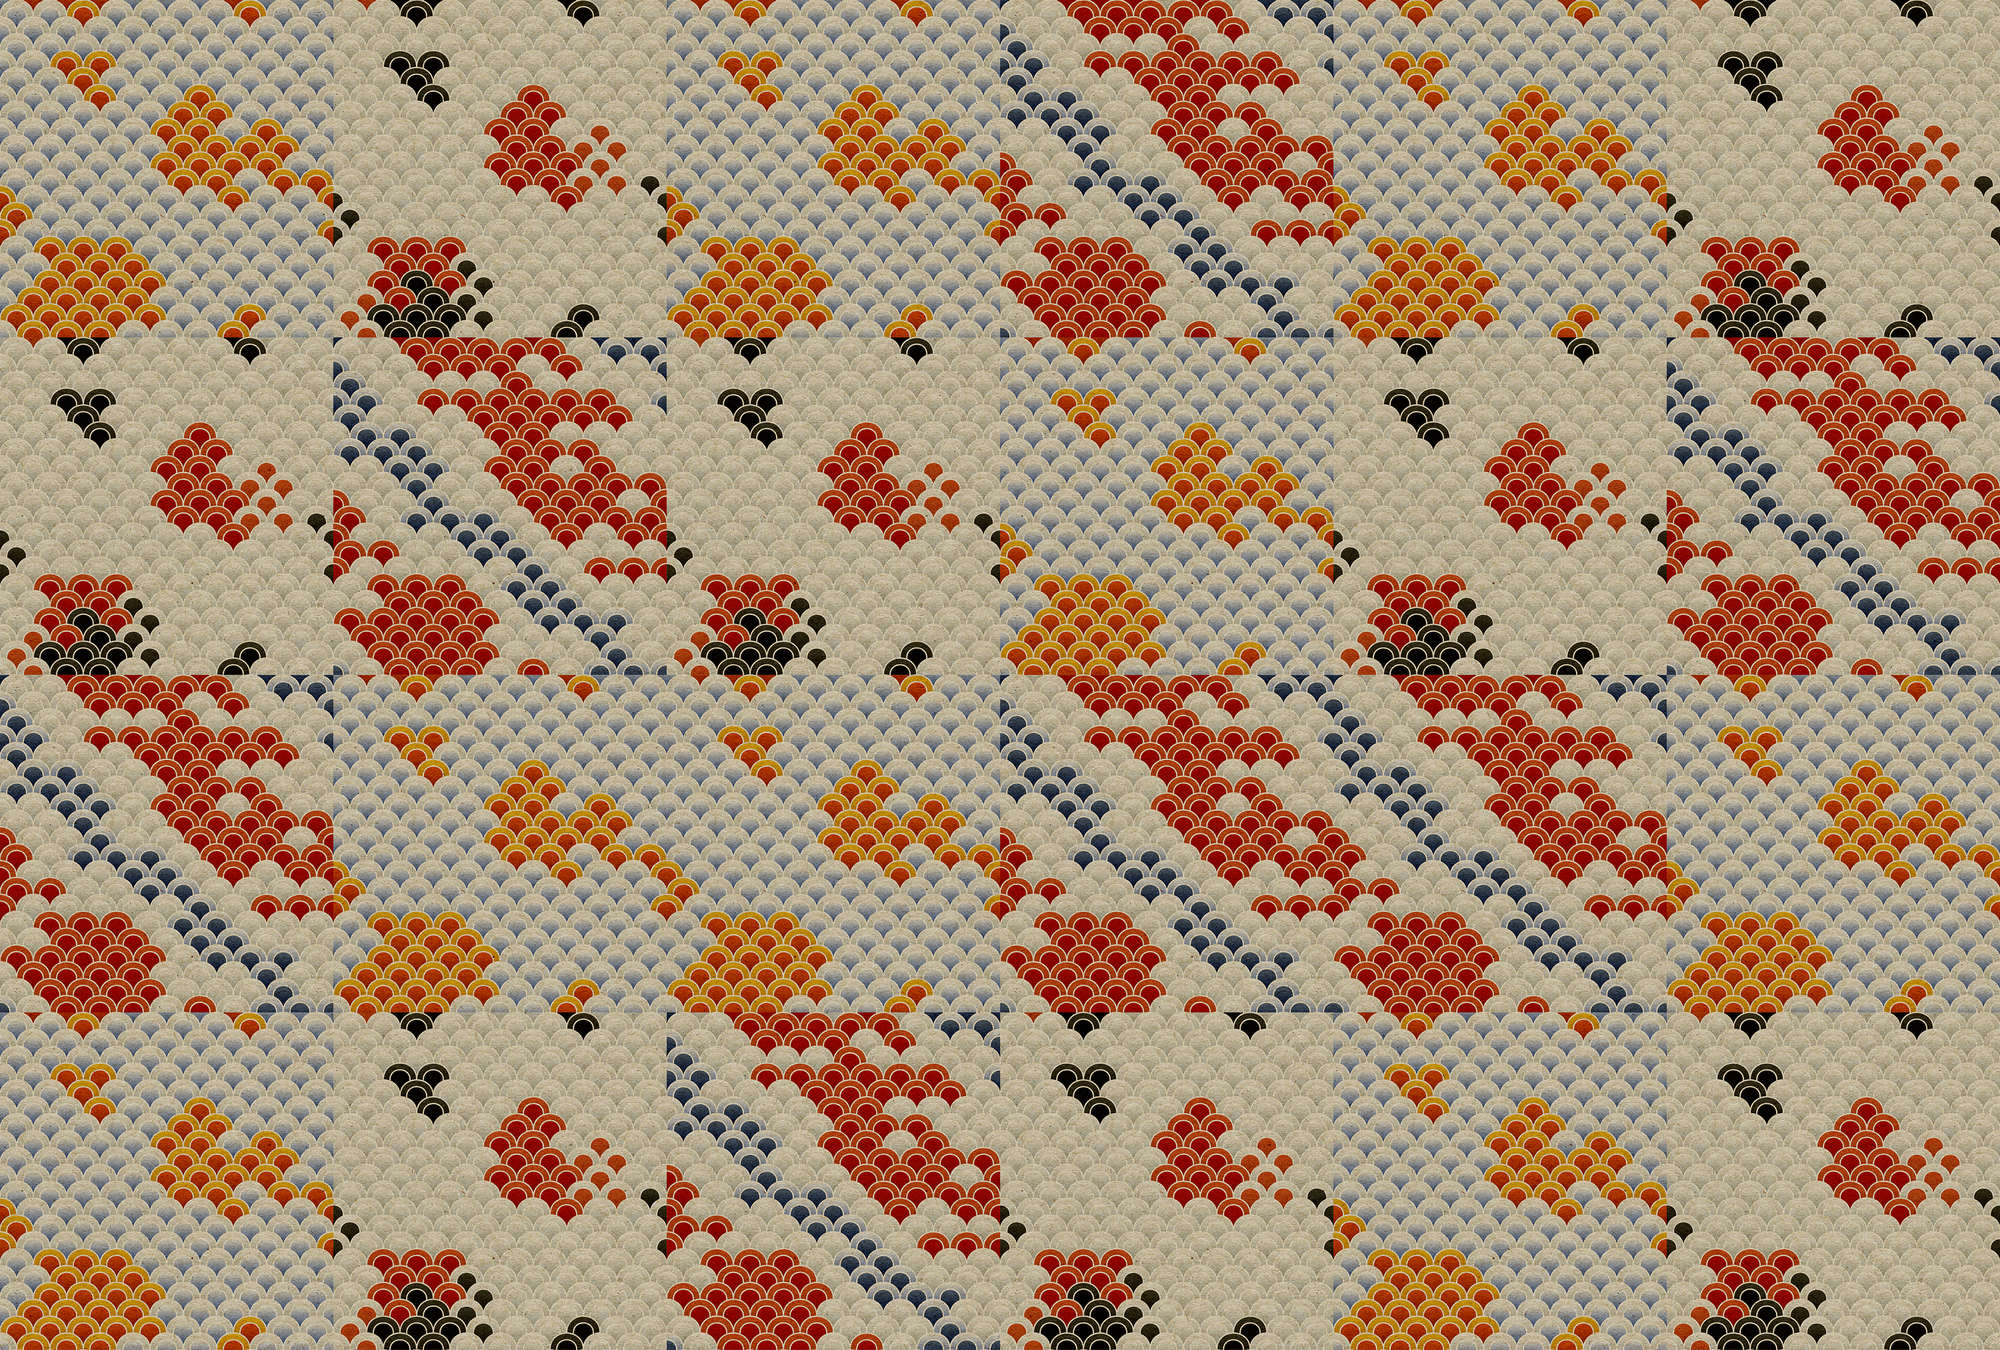             Koi 3 - Abstracte Koi-vijver als digitale print op kartonnen structuur - beige, oranje | parelmoer gladde fleece
        